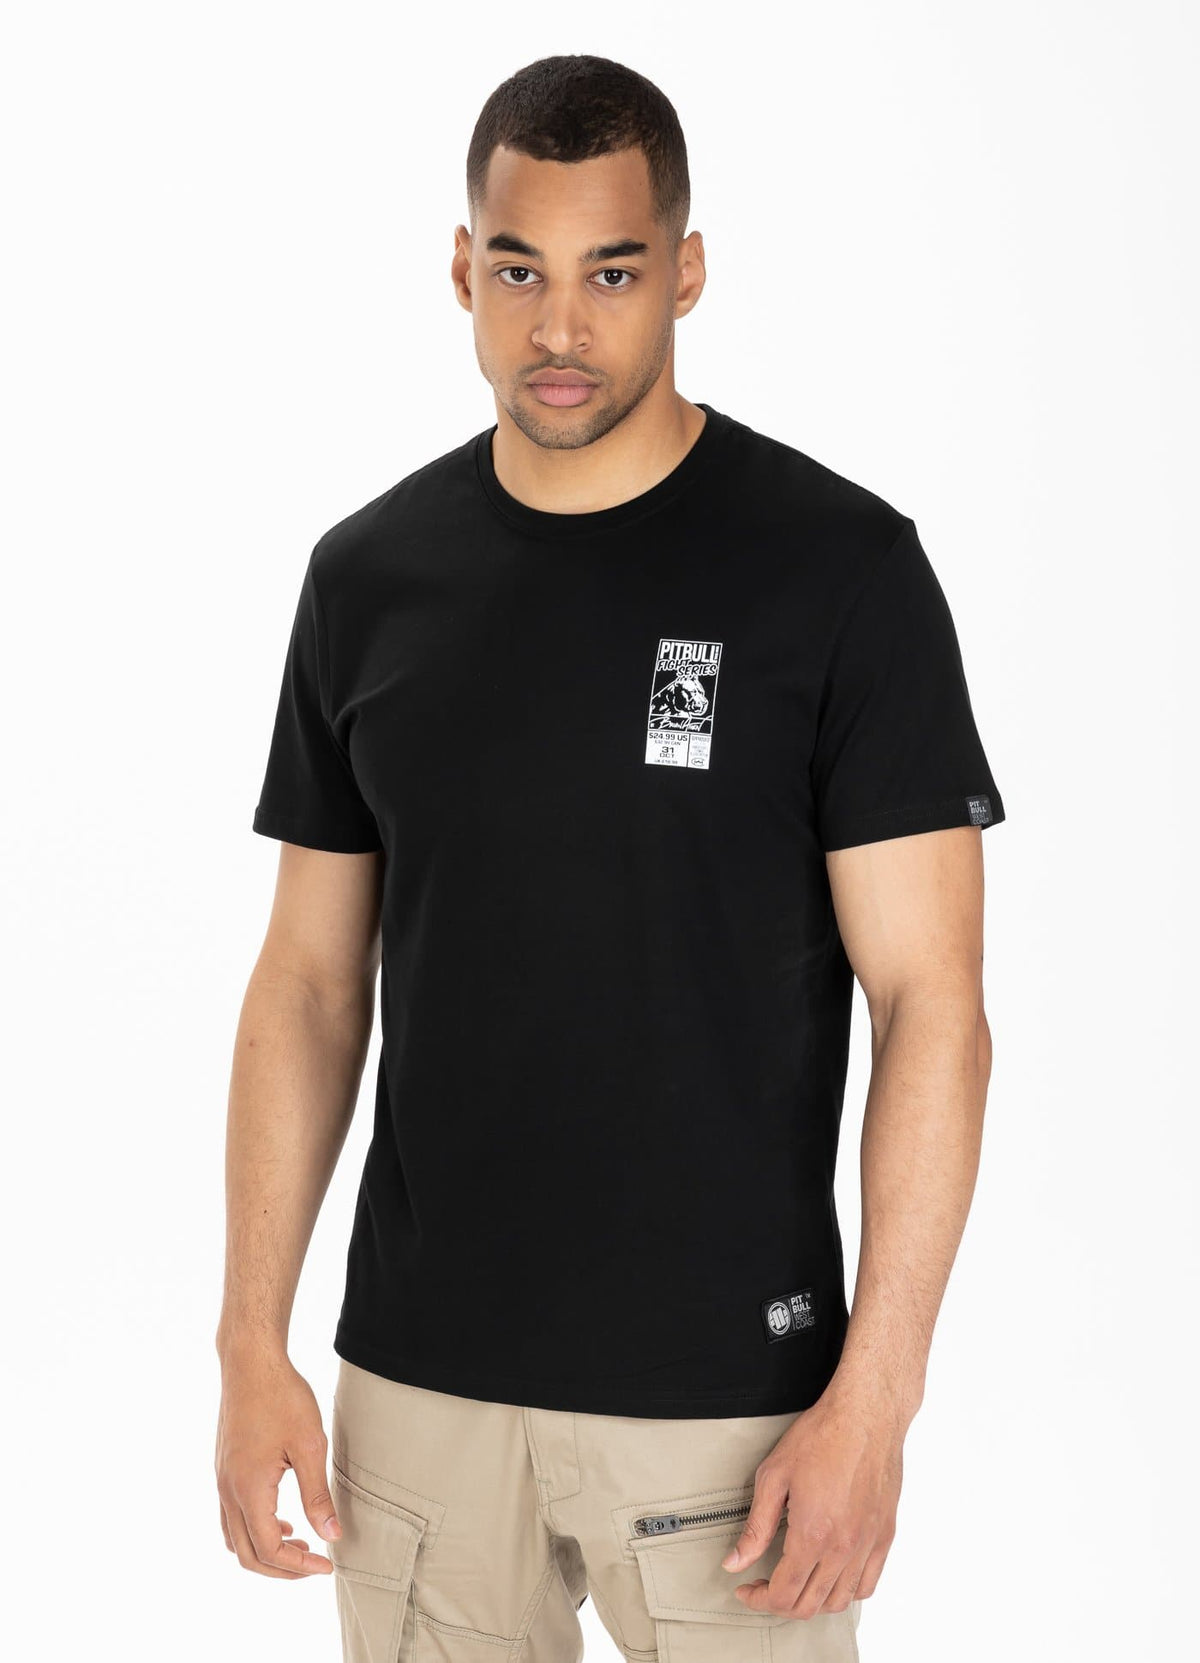 T-shirt MASTER OF BOXING Black - Pitbull West Coast International Store 